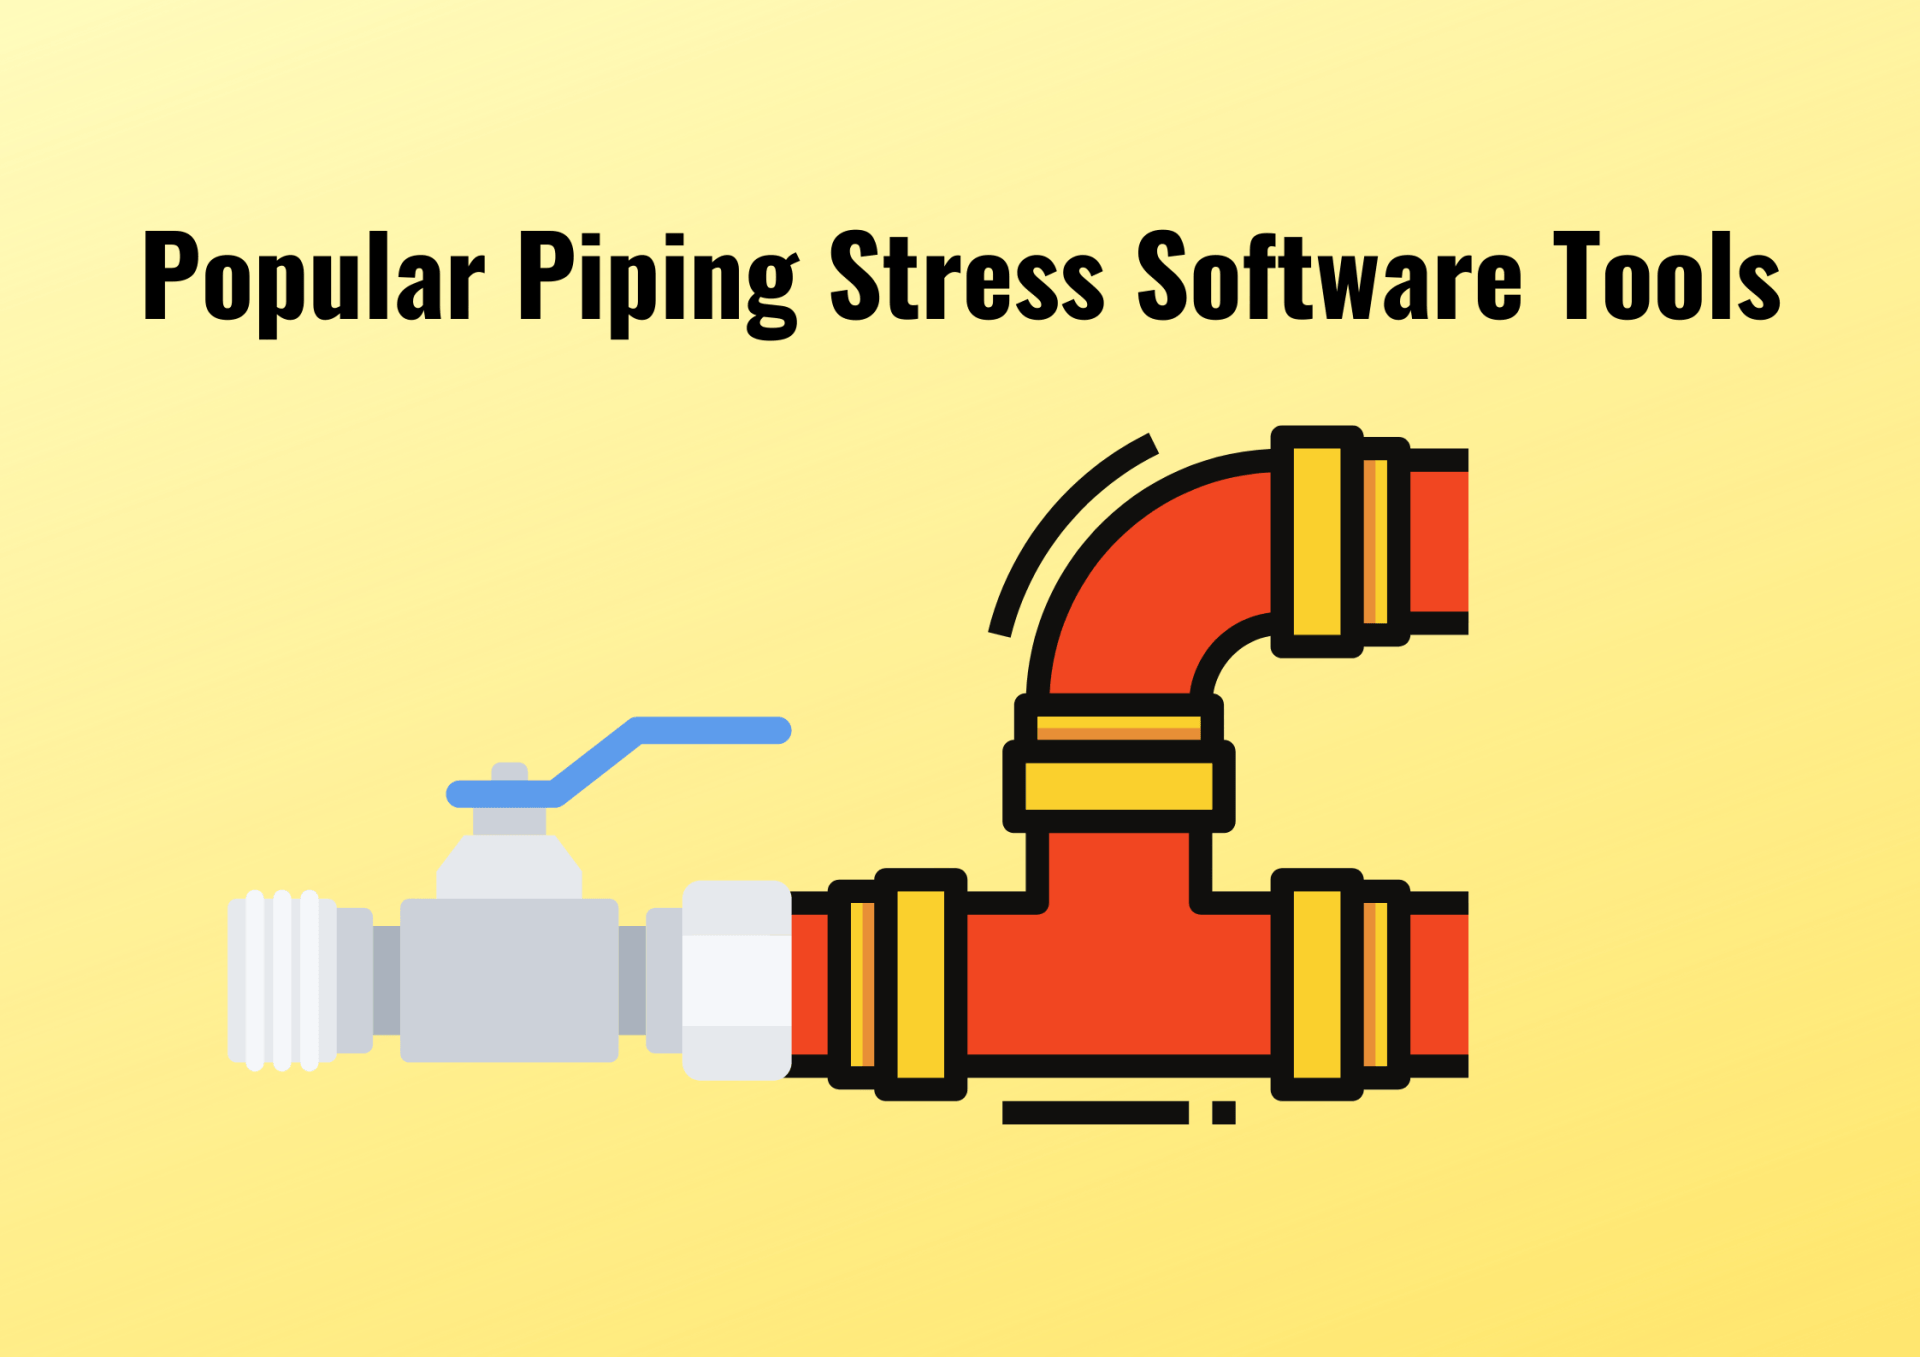 Piping stress analysis software